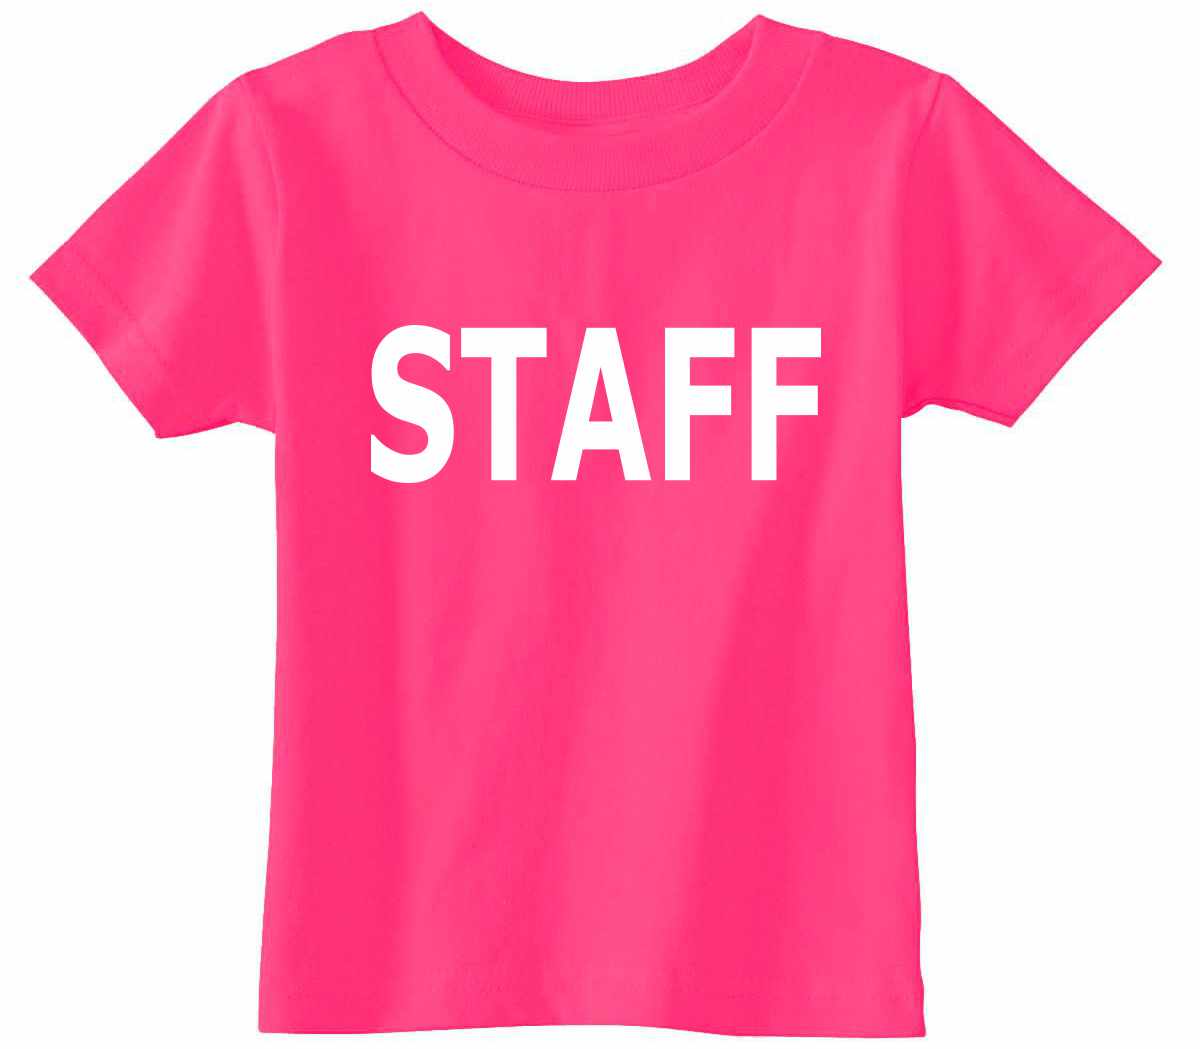 STAFF on Infant-Toddler T-Shirt (#923-7)